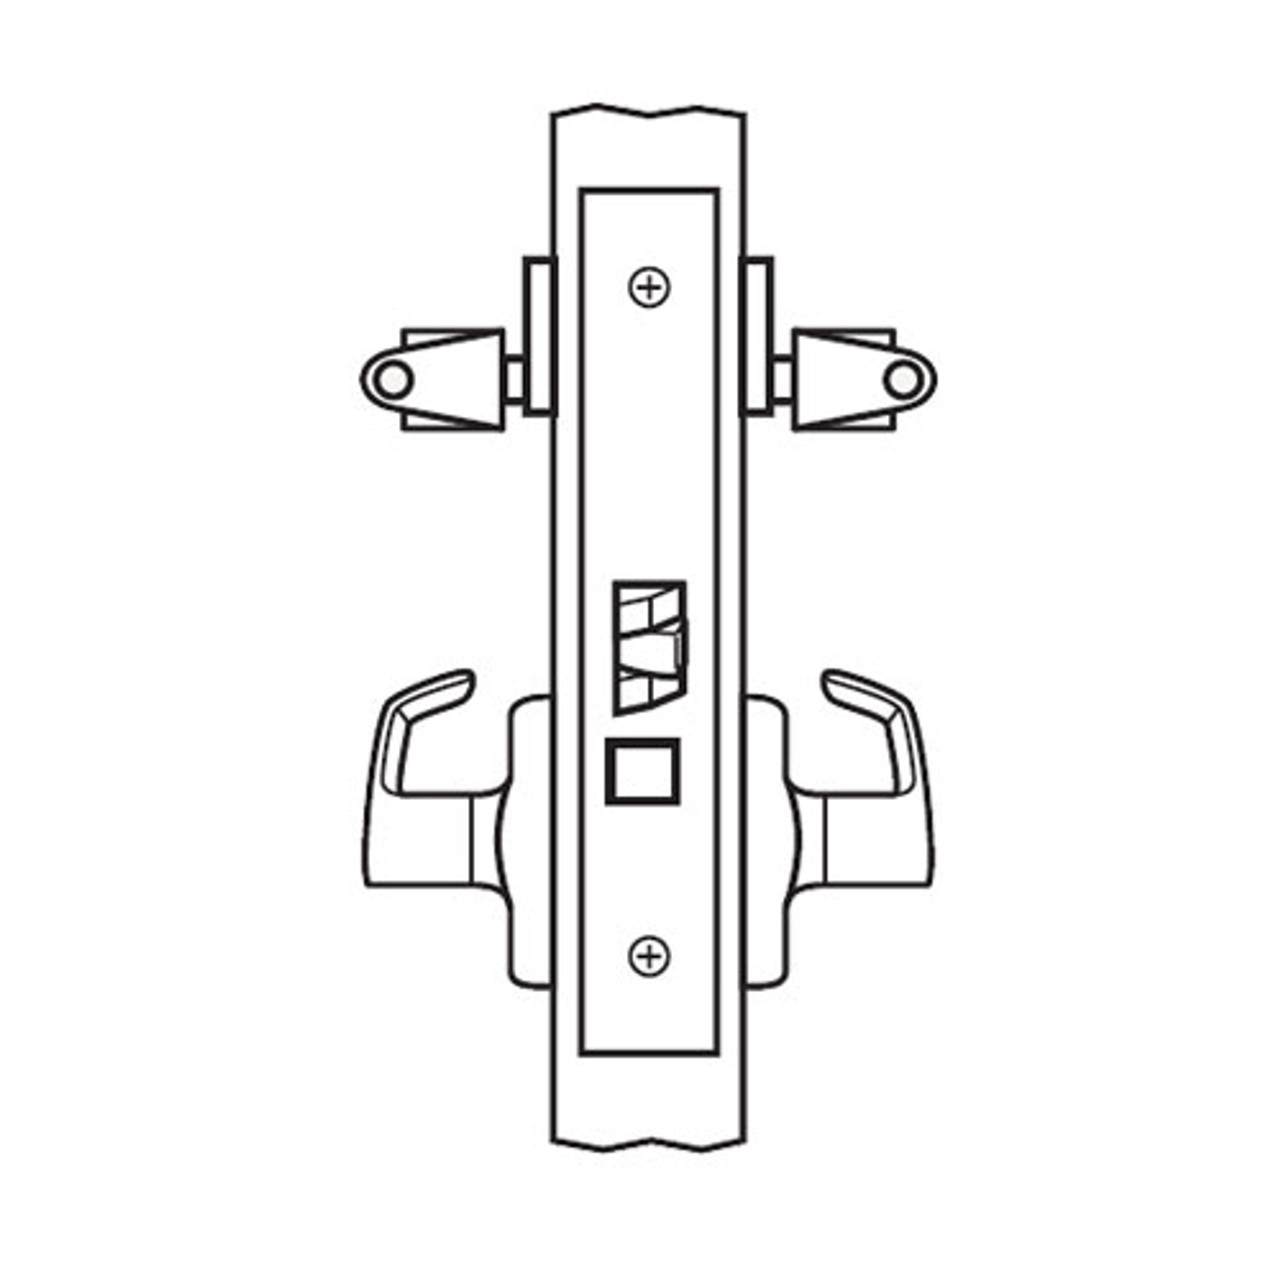 BM32-BRG-26D Arrow Mortise Lock BM Series Vestibule Lever with Broadway Design and G Escutcheon in Satin Chrome